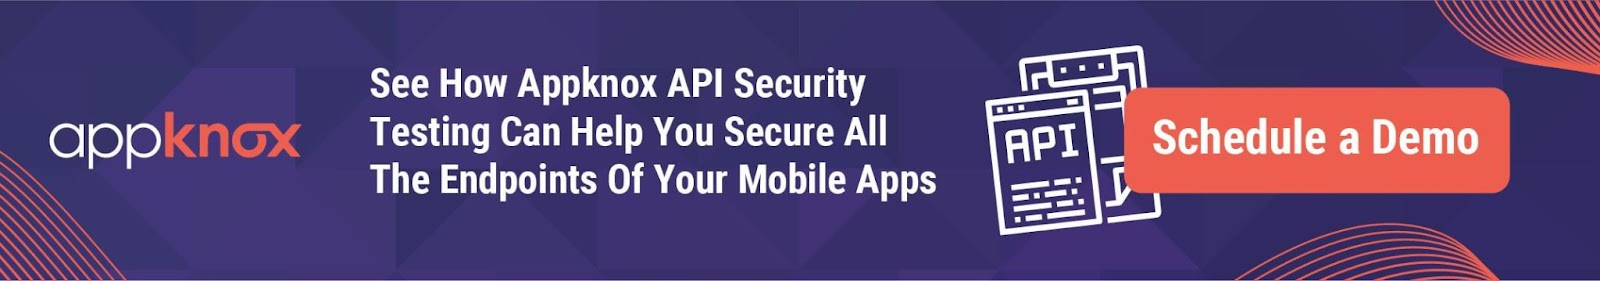 Appknox Total Mobile Security